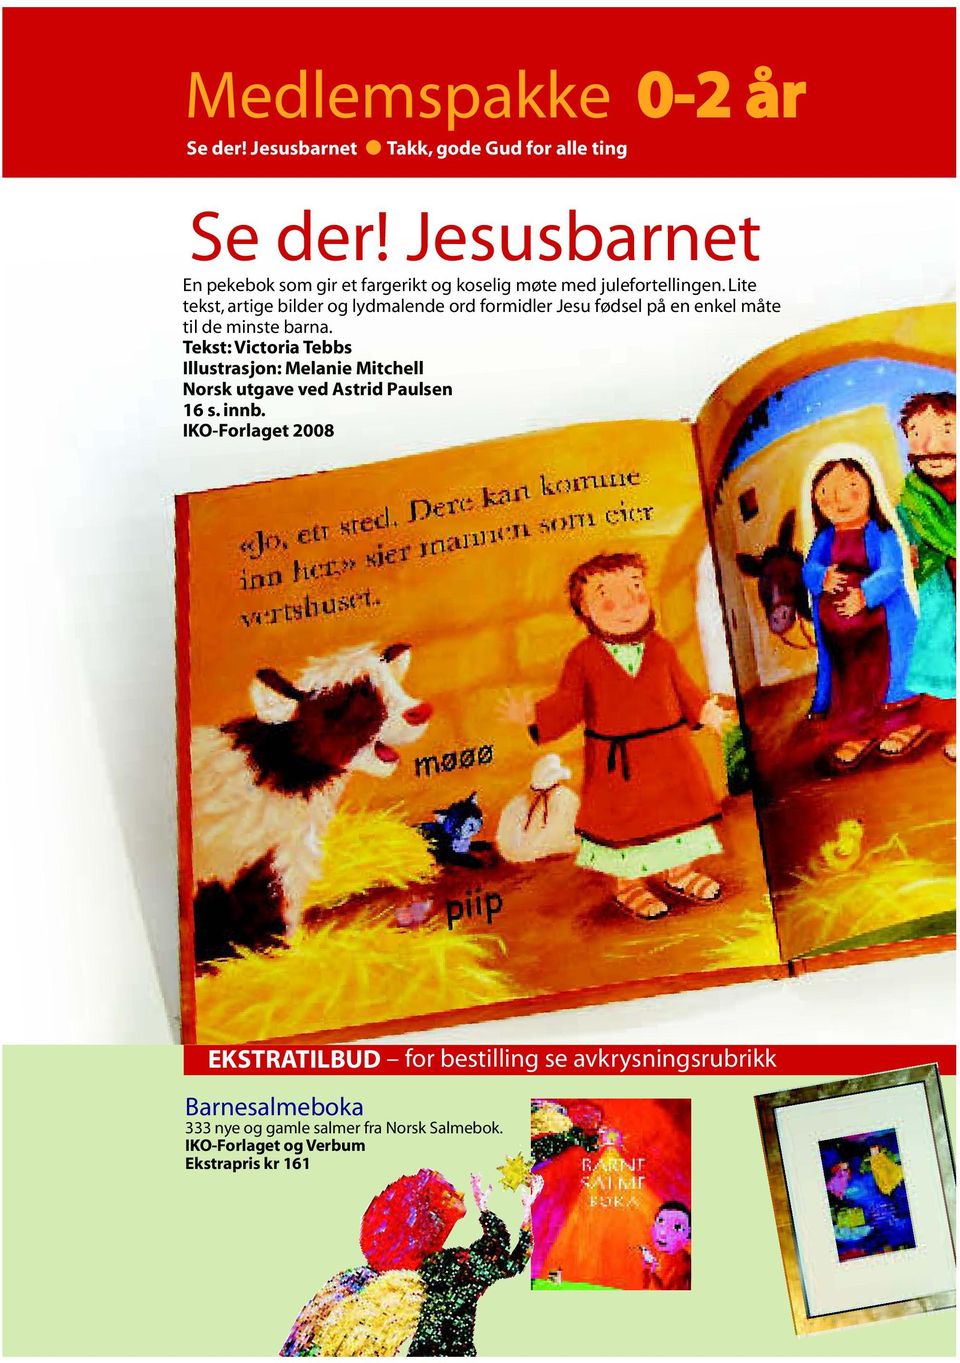 Lite tekst, artige bilder og lydmalende ord formidler Jesu fødsel på en enkel måte til de minste barna.